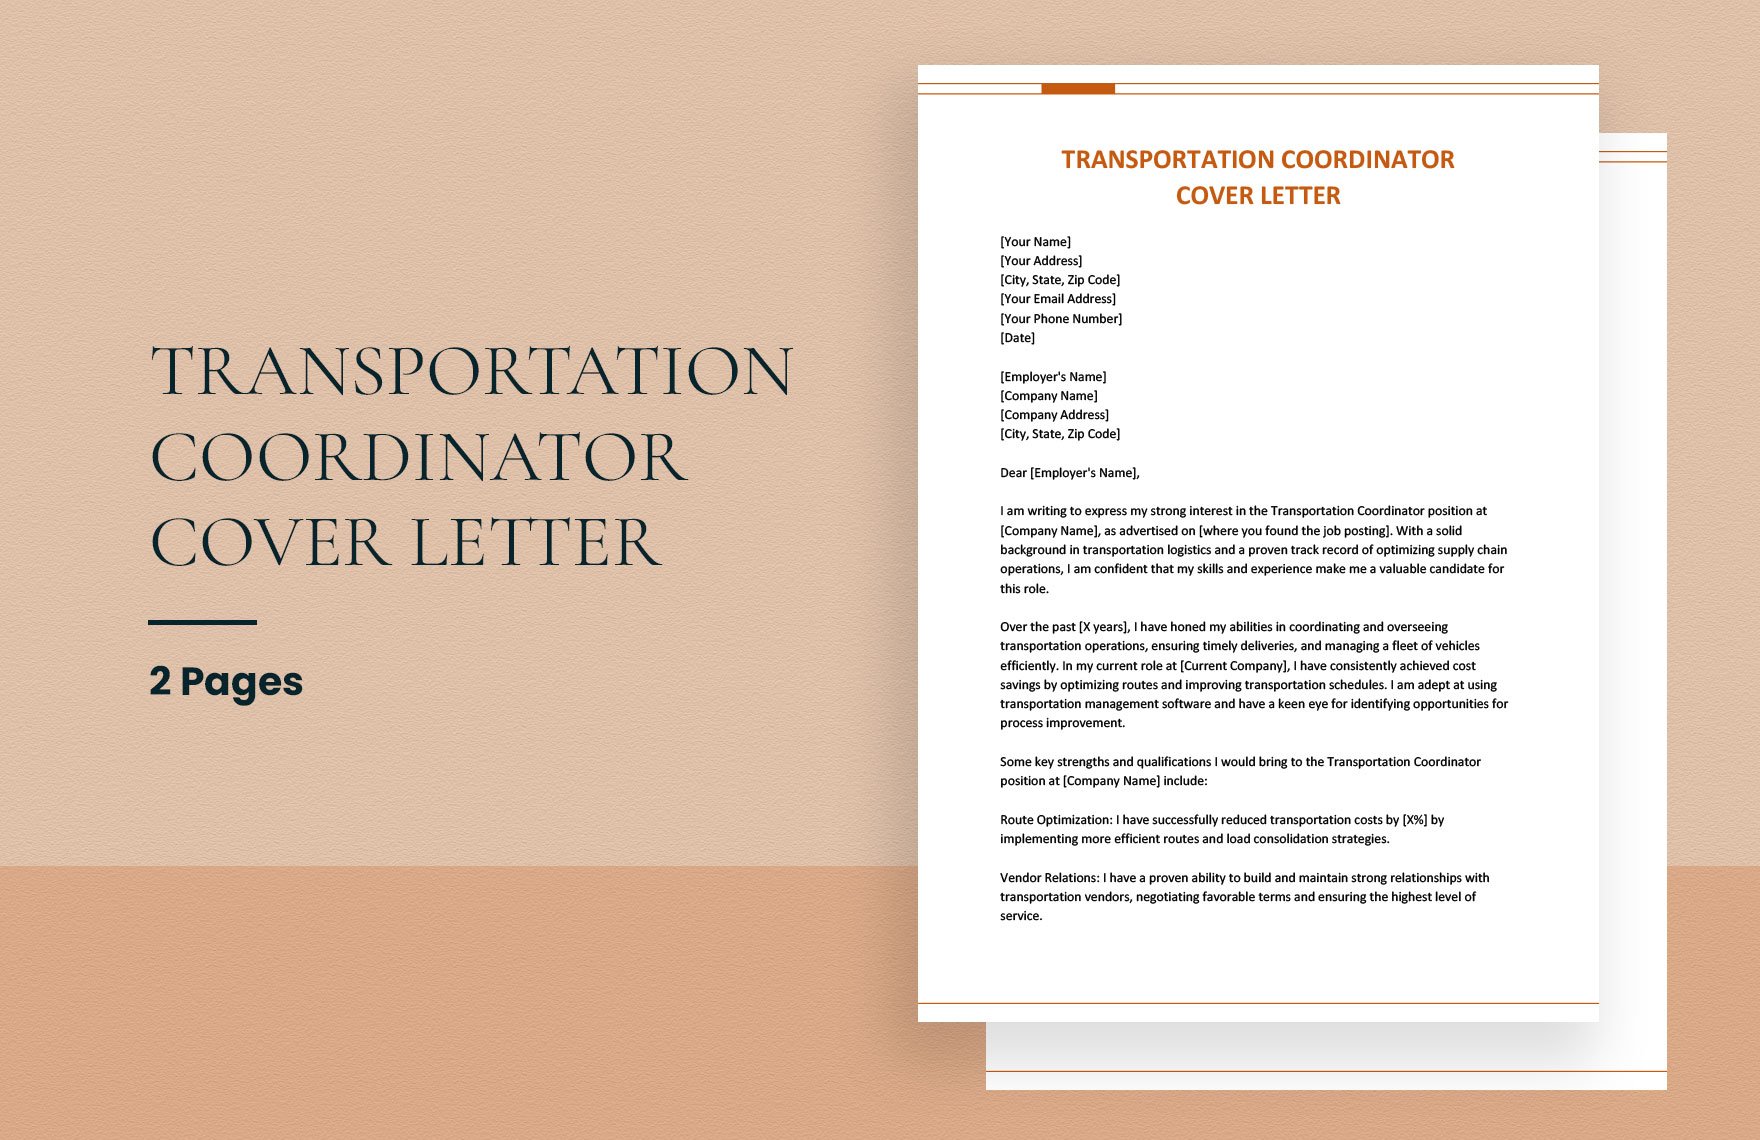 Transportation Coordinator Cover Letter in Word, Google Docs